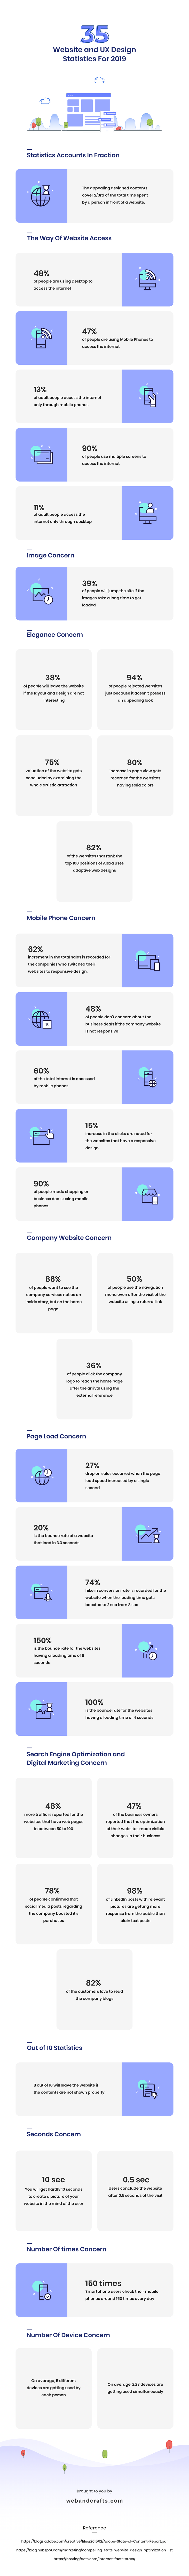 ux and website design statistics